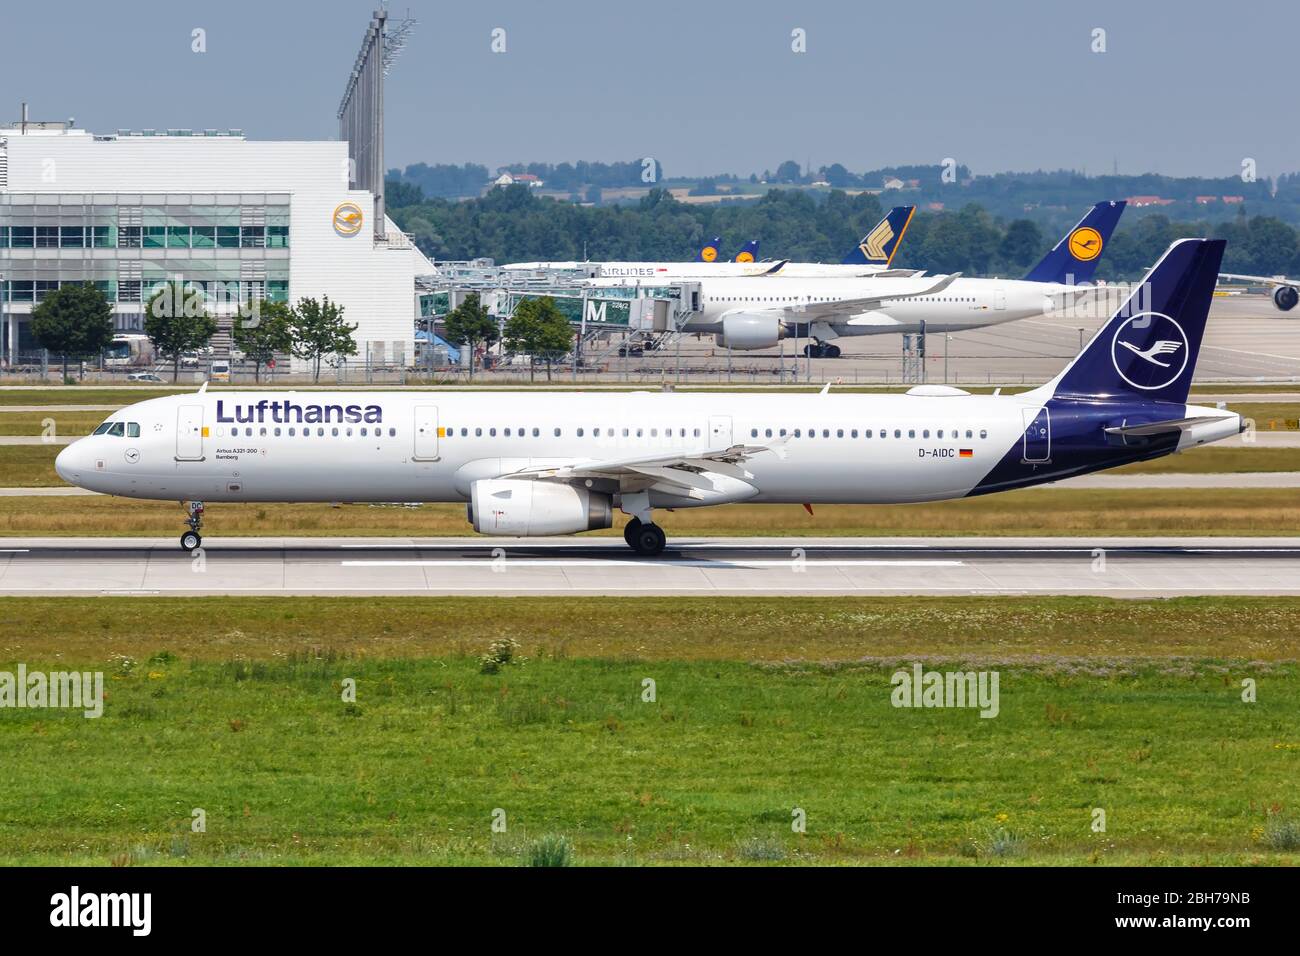 Munich, Germany – July 20, 2019: Lufthansa Airbus A321 airplane at Munich airport (MUC) in Germany. Airbus is a European aircraft manufacturer based i Stock Photo